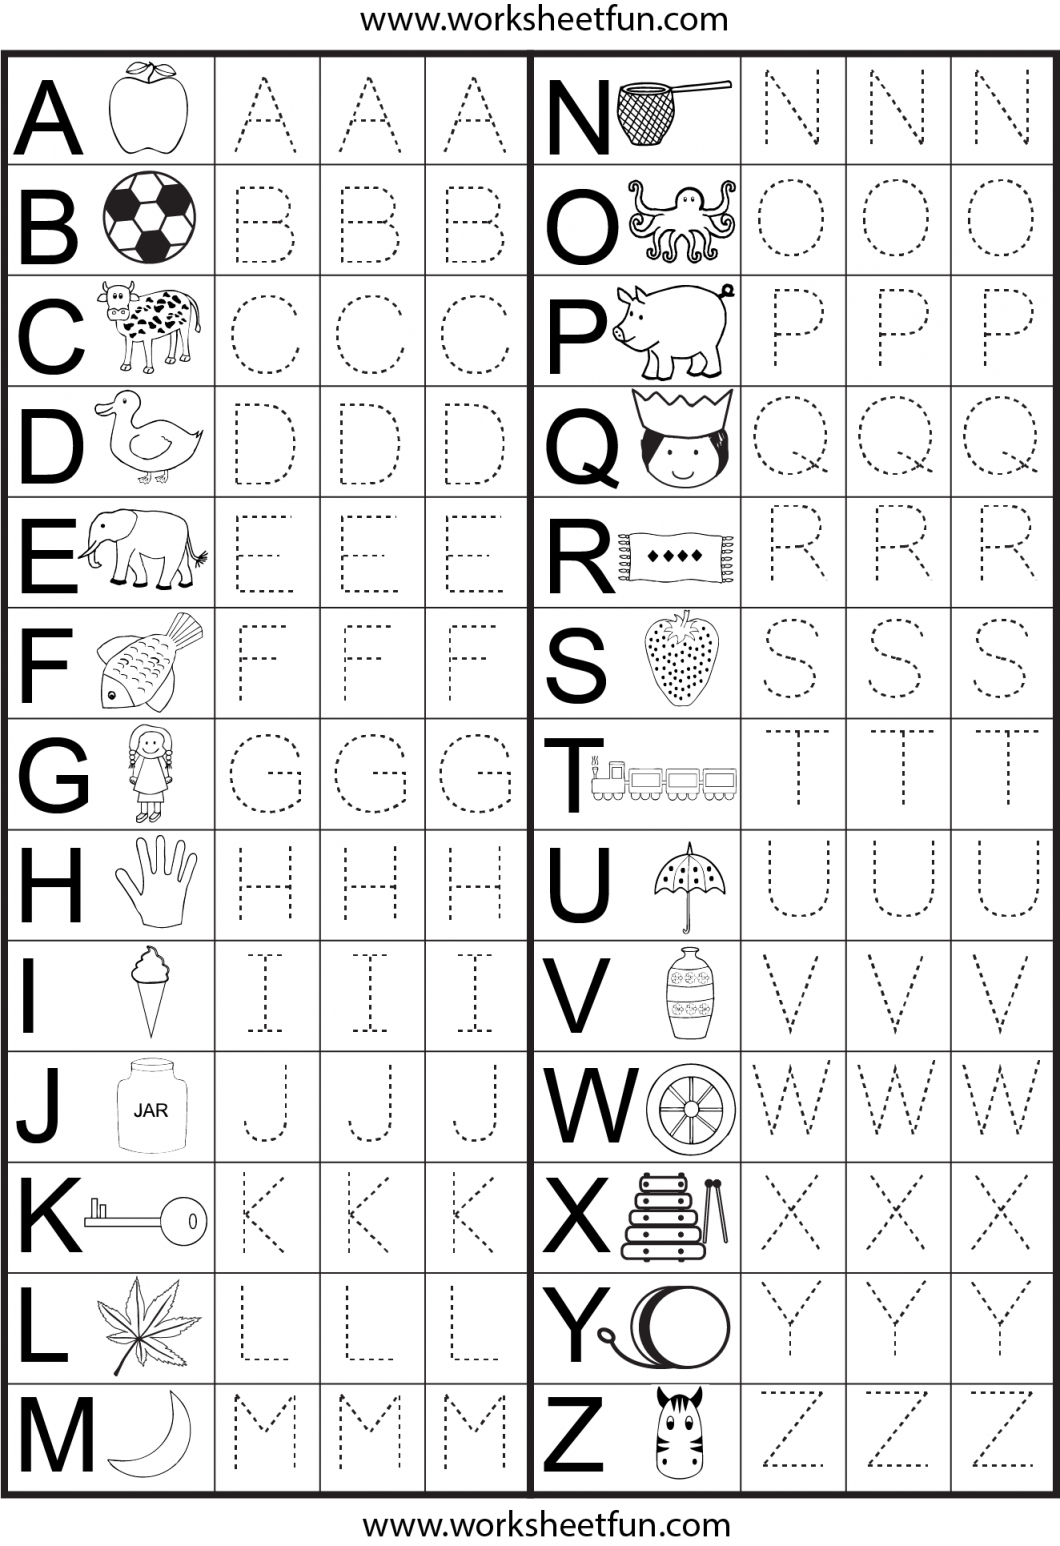 Preschool Letter Worksheets Free – With Curriculum Also Kindergarten | Printable Letter Worksheets For Preschoolers